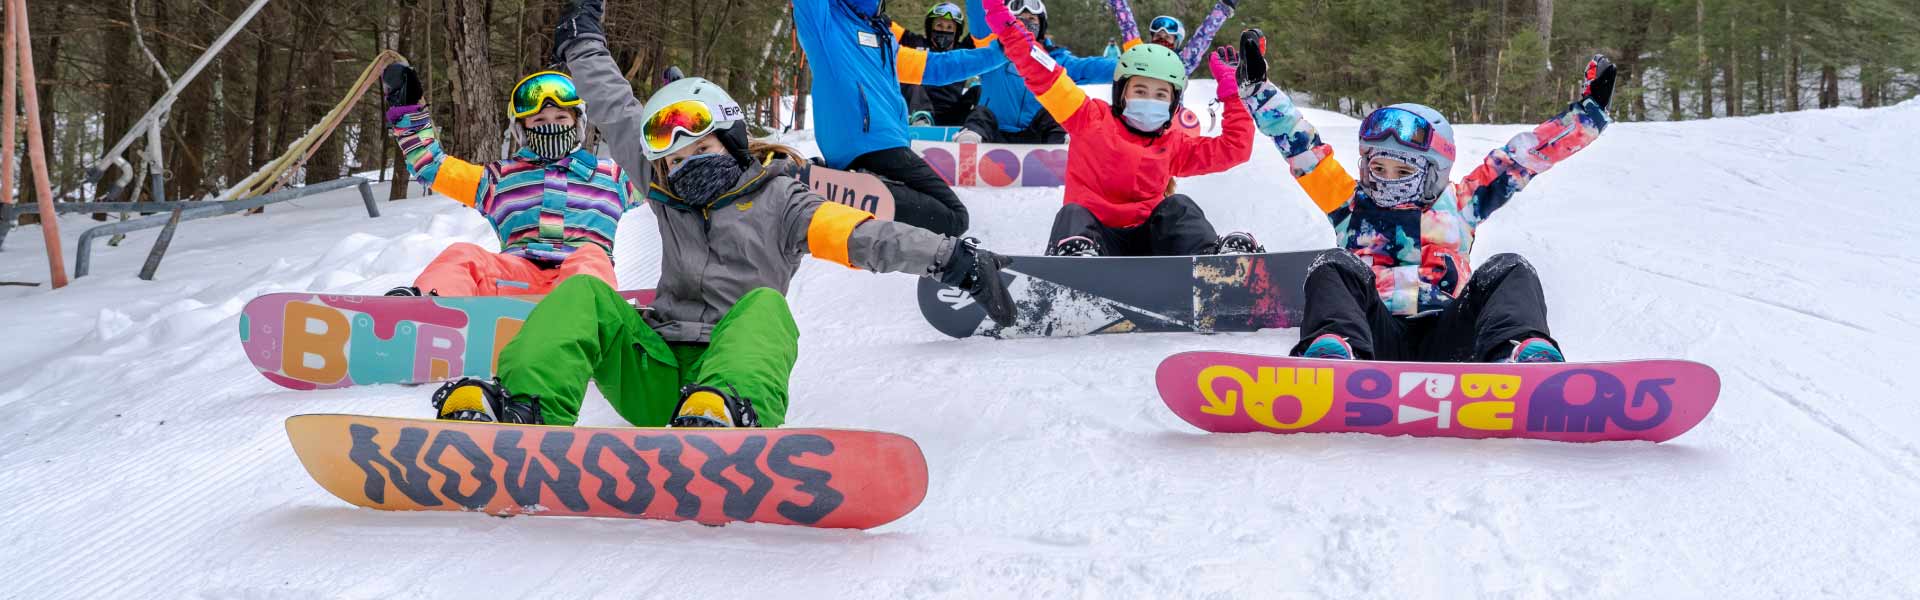 Female snowboarders in Girls Rock the Park program